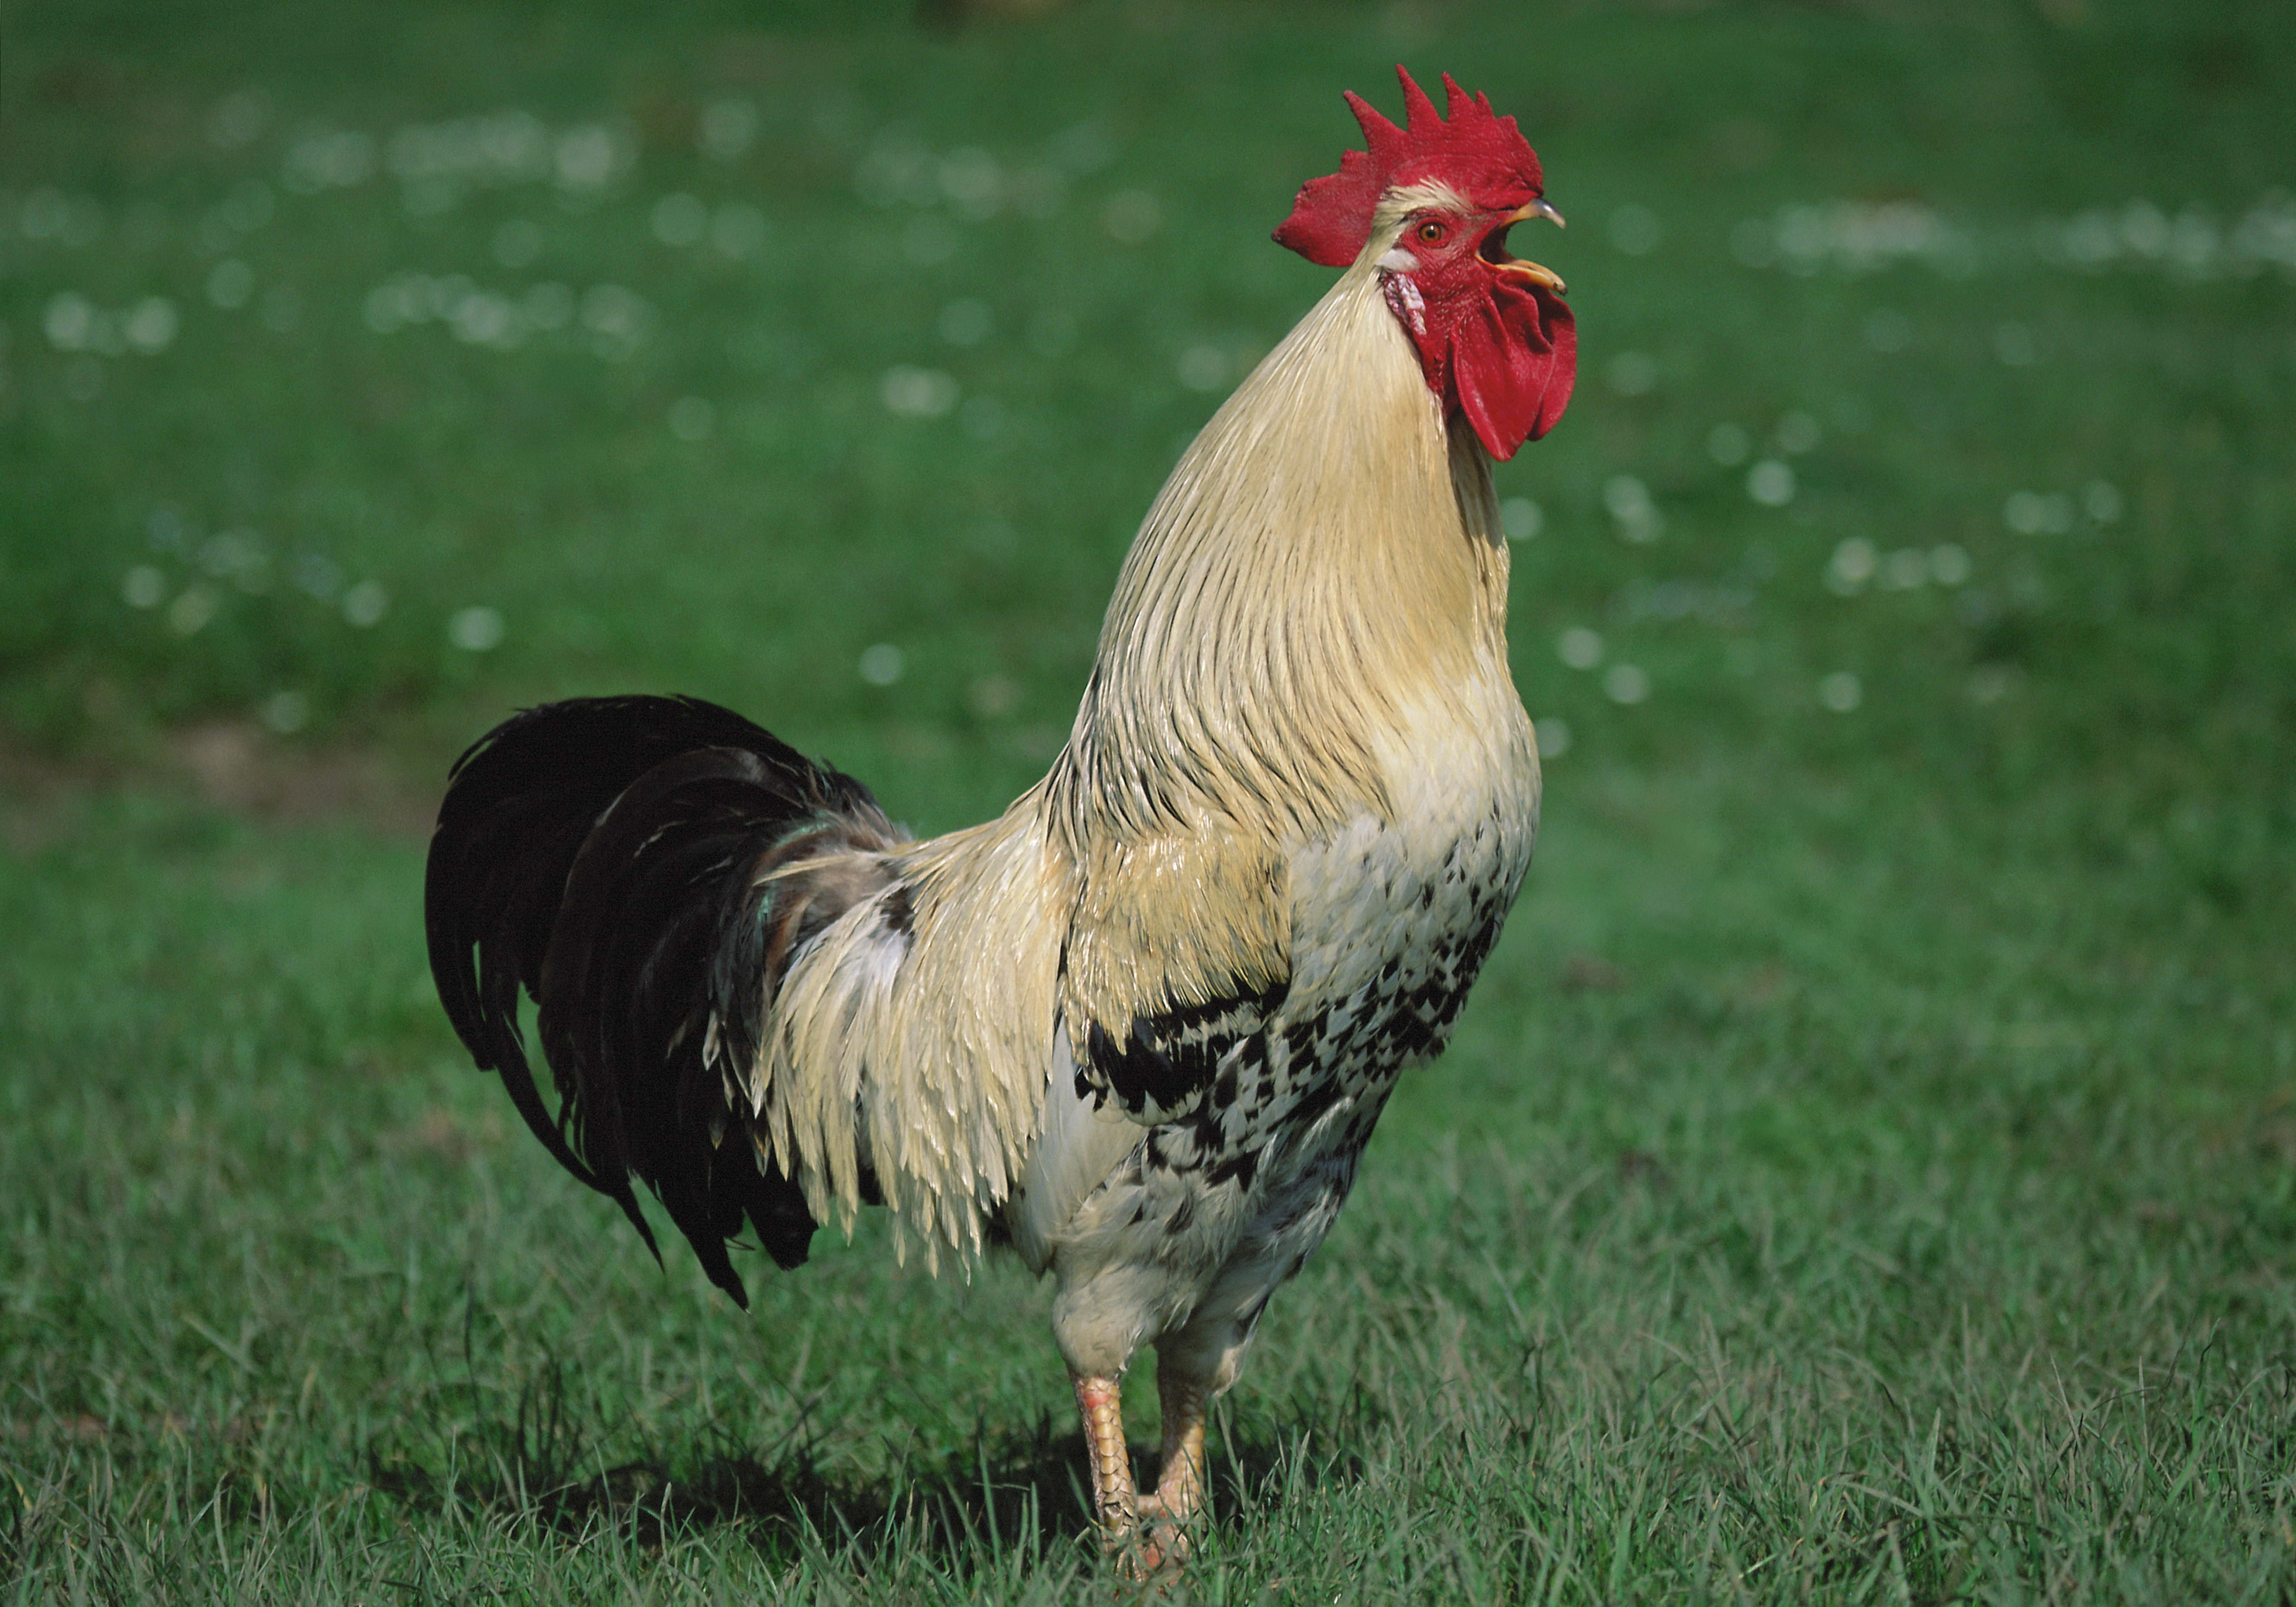 beige rooster on green grass field